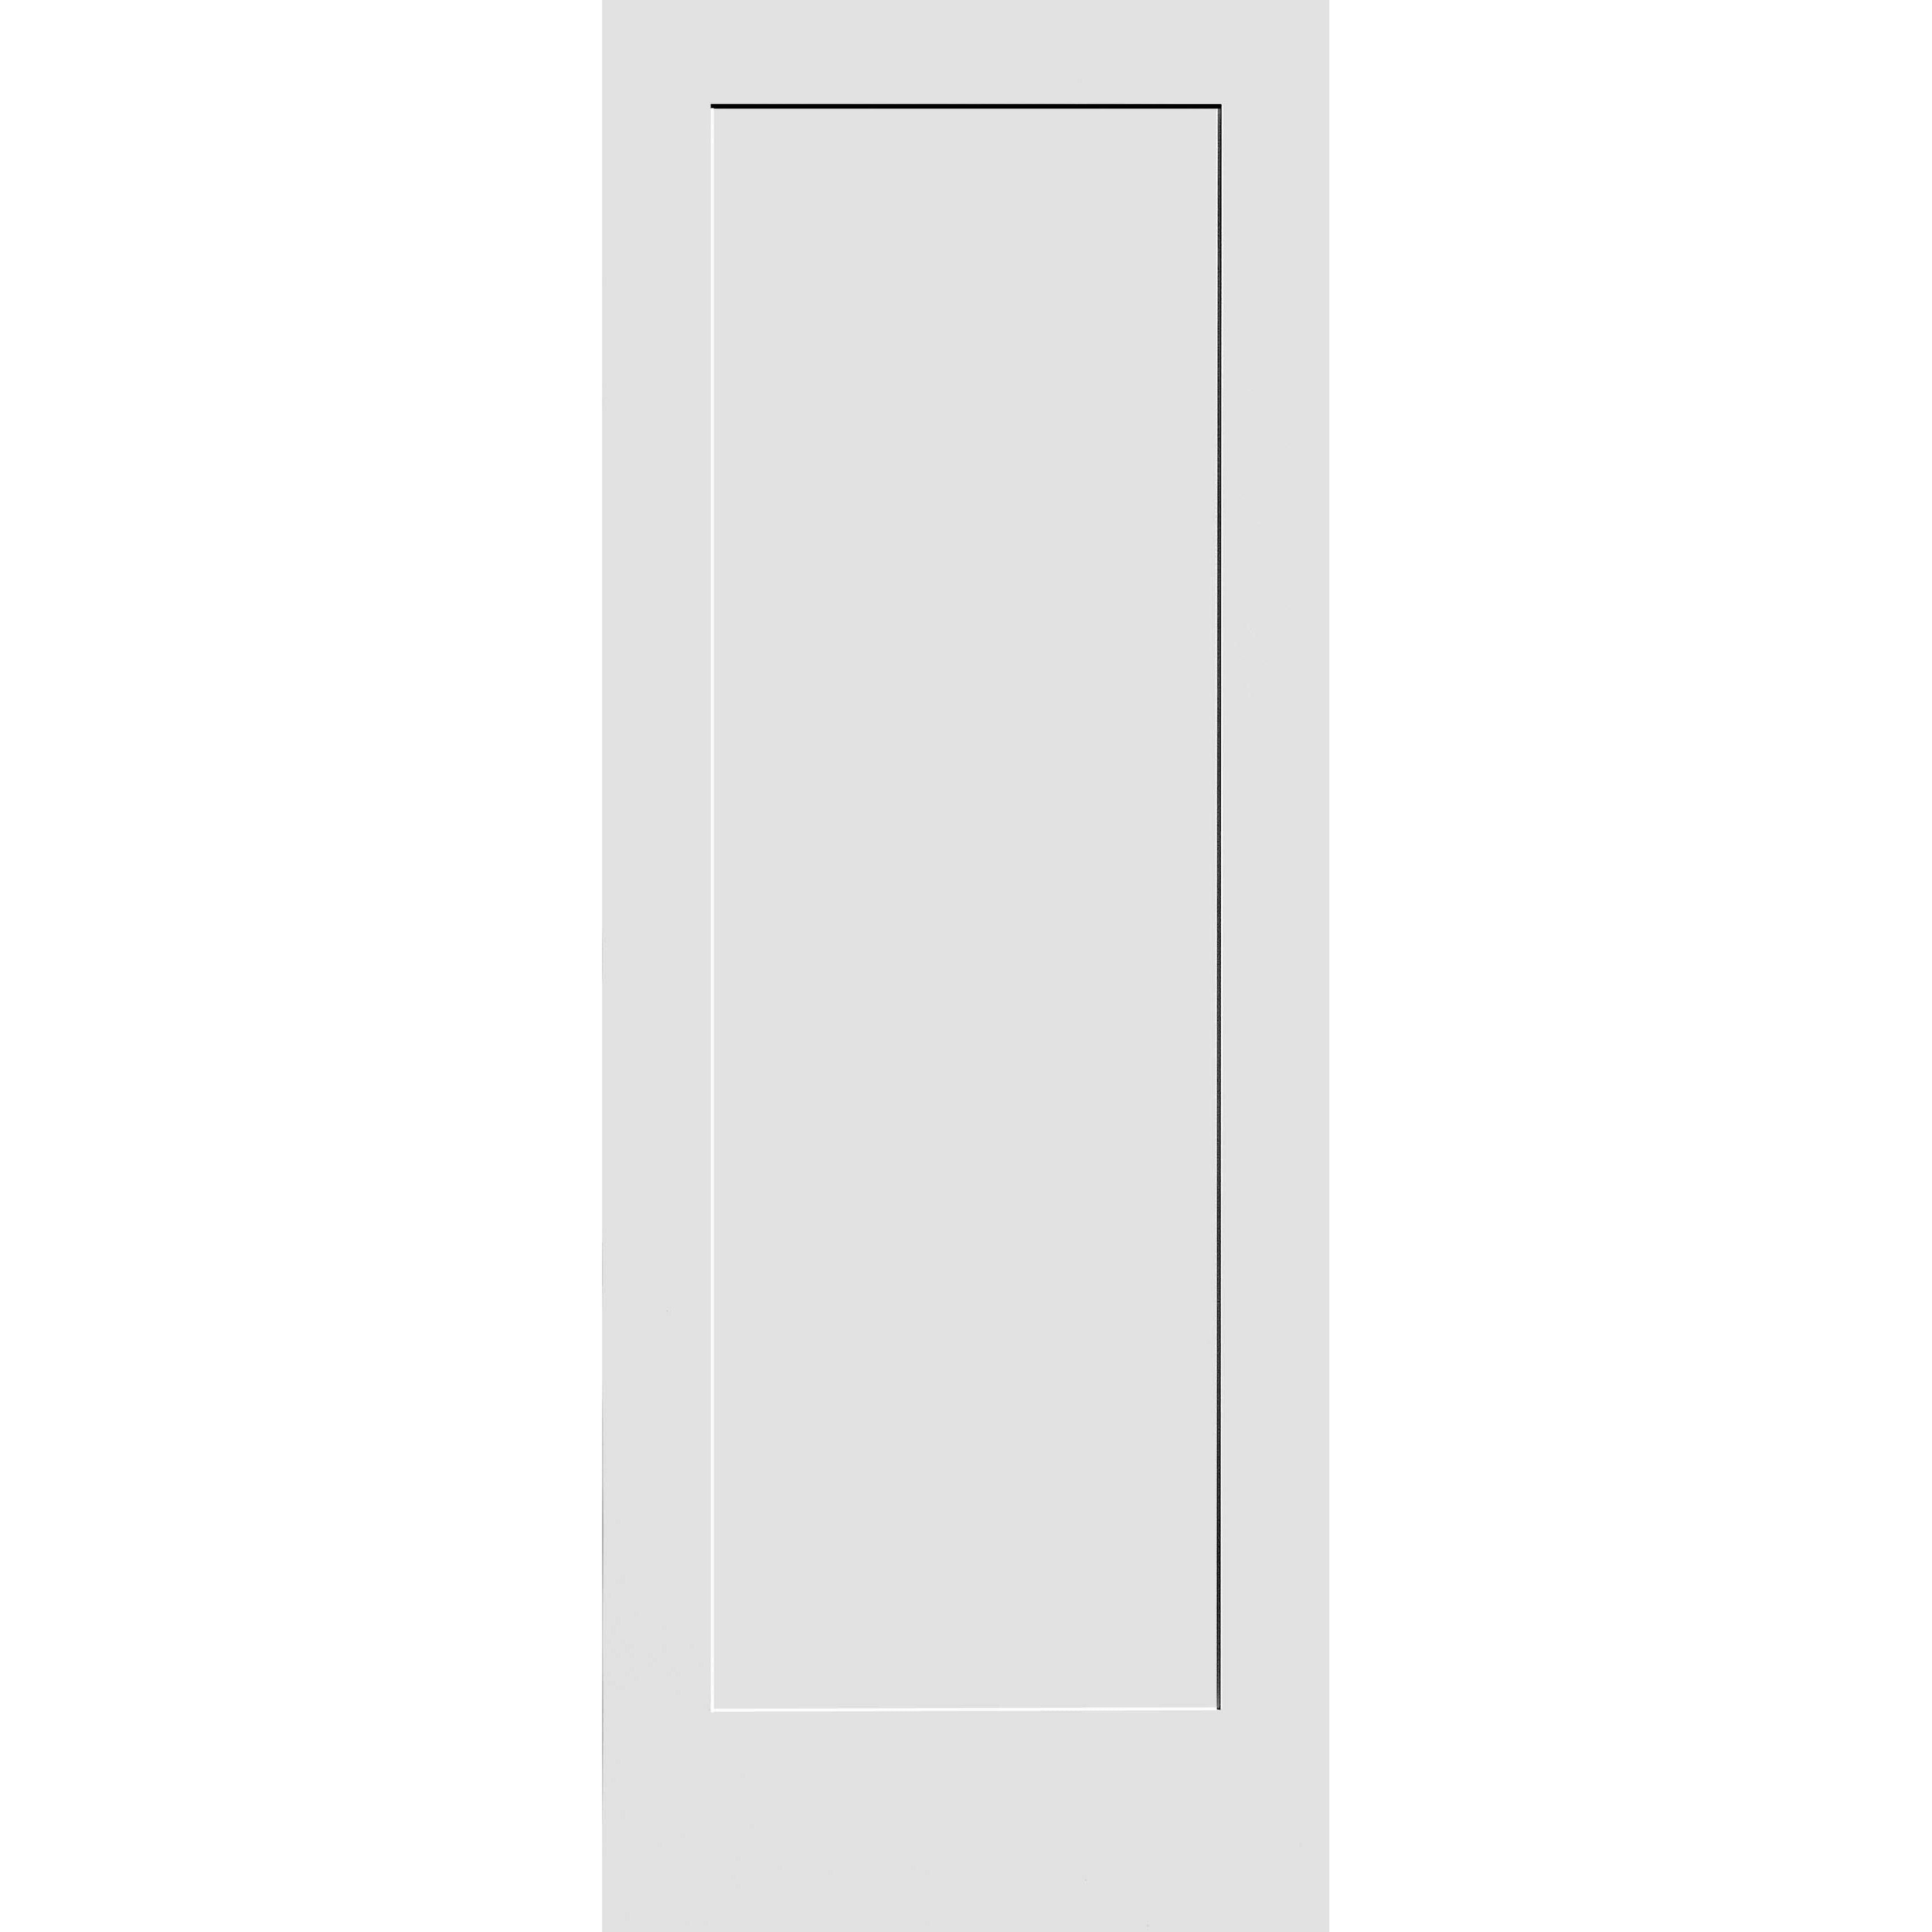 30X84 #8401 MDF PRIMED SHAKER PANEL INTERIOR DOOR 1-3/4 THICKNESS